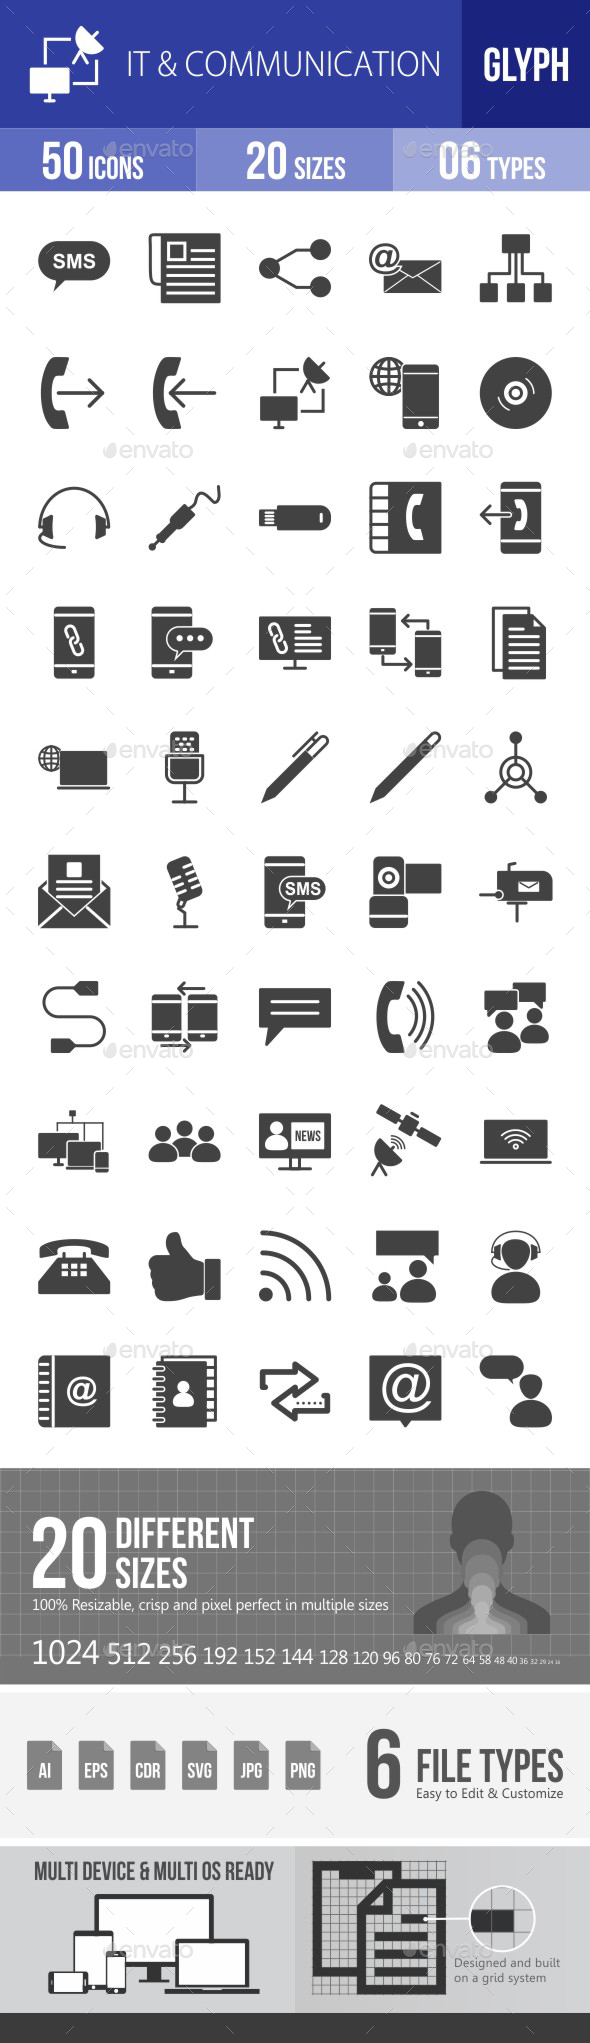 IT & Communication Glyph Icons